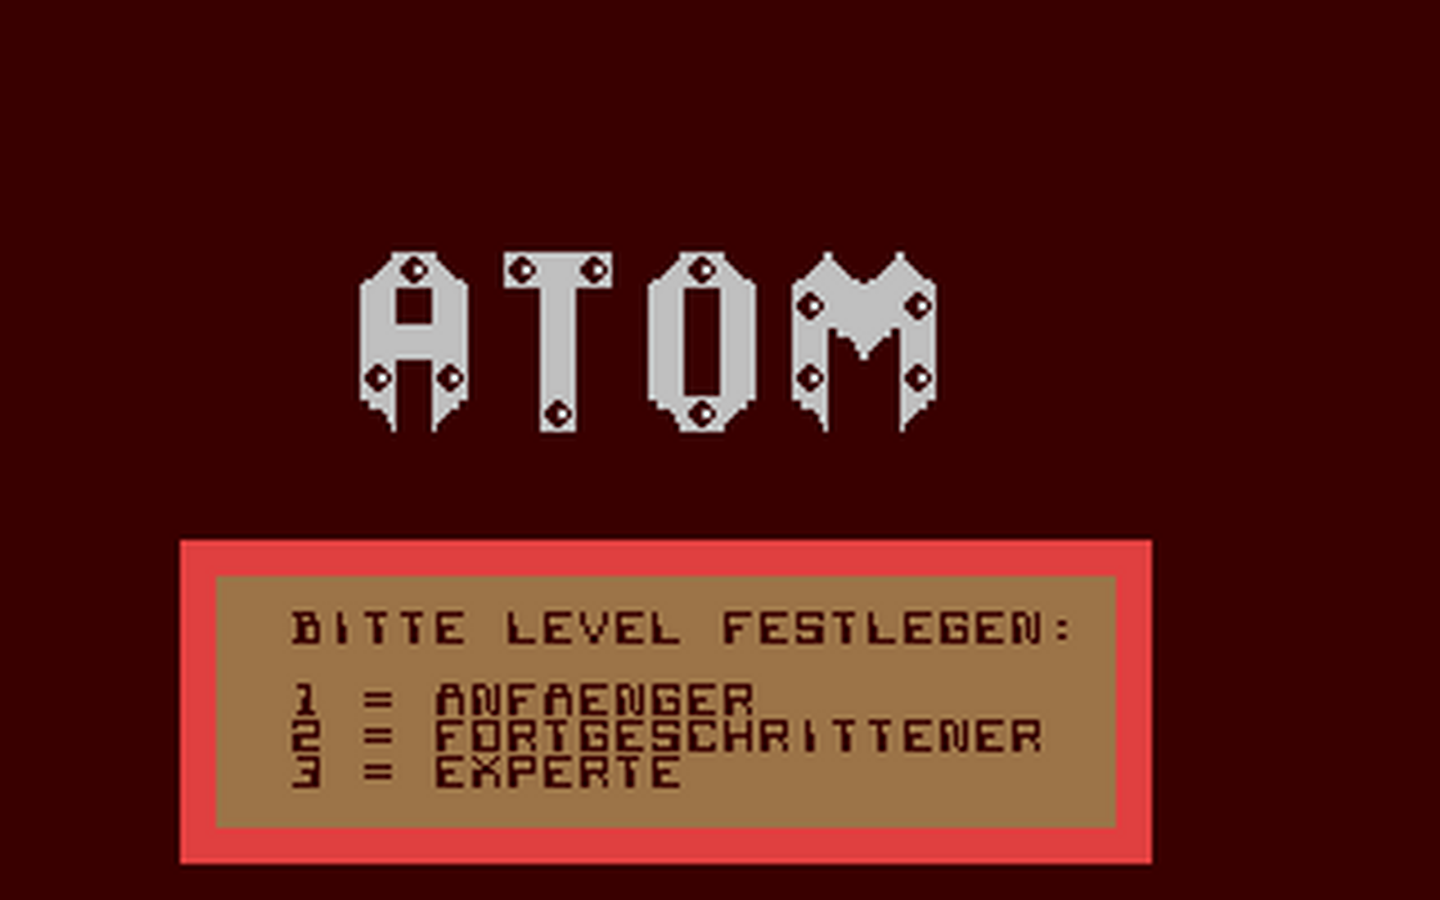 C64 GameBase Atom Tronic_Verlag_GmbH/Compute_mit 1986